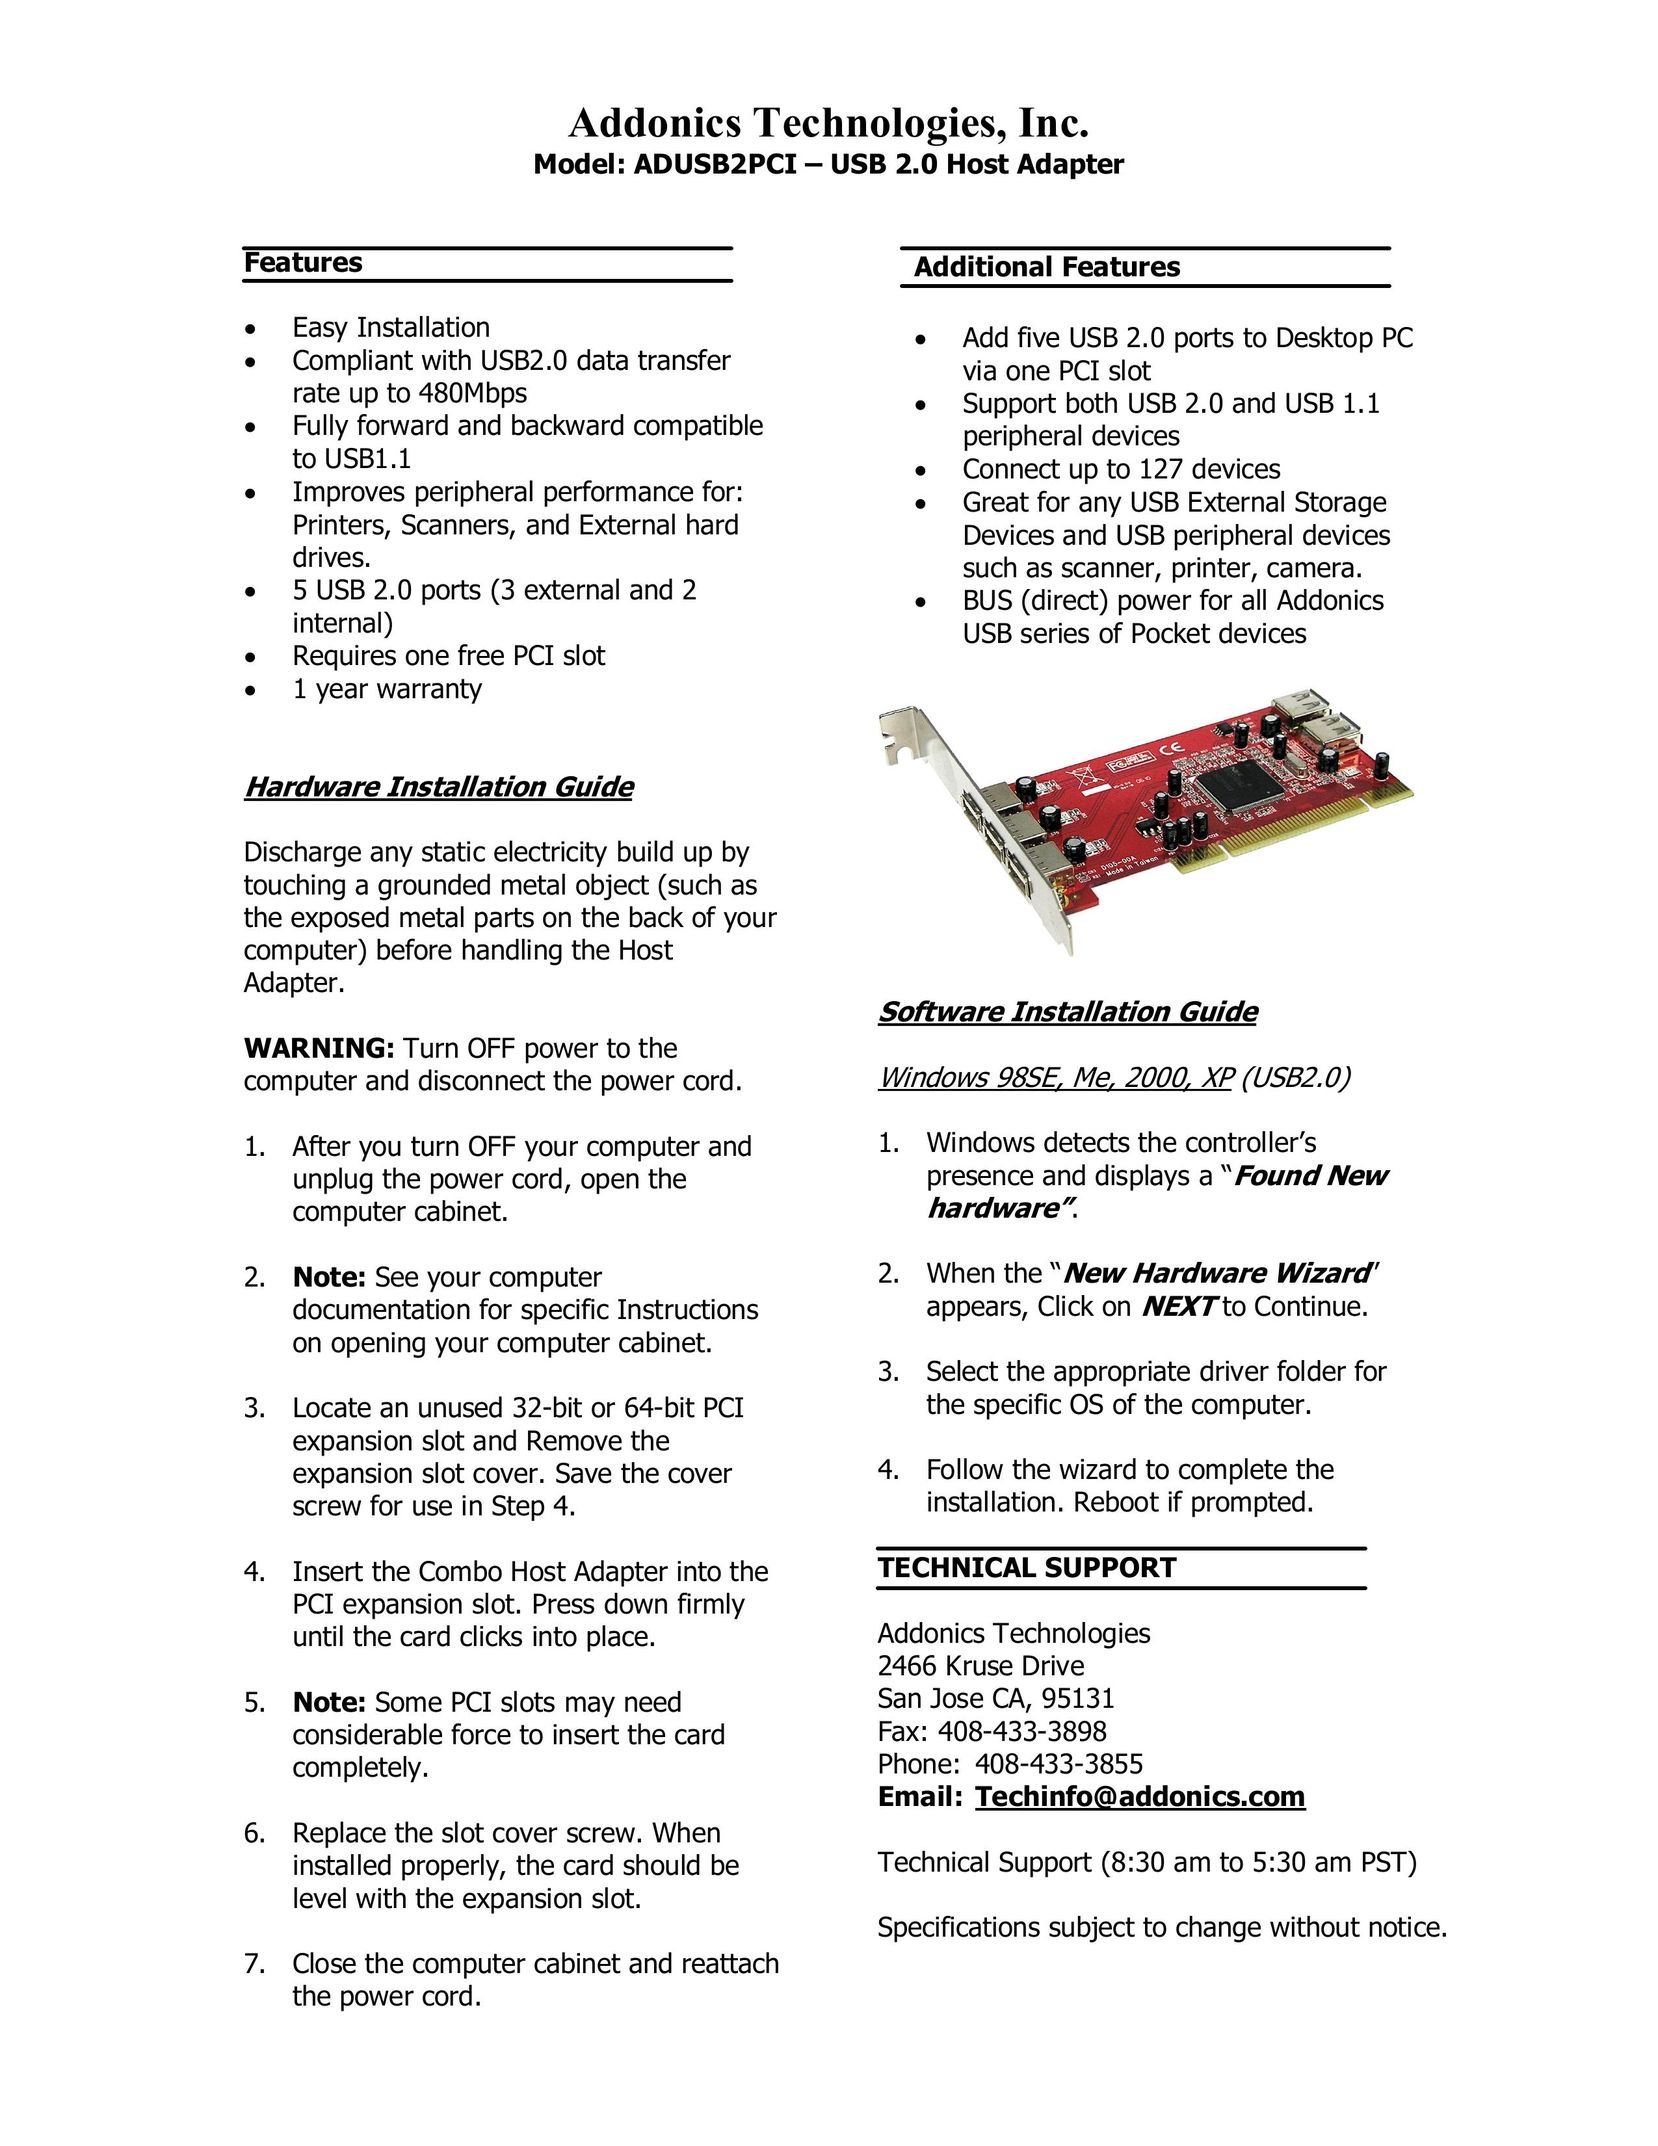 Addonics Technologies ADUSB2PCI Computer Hardware User Manual